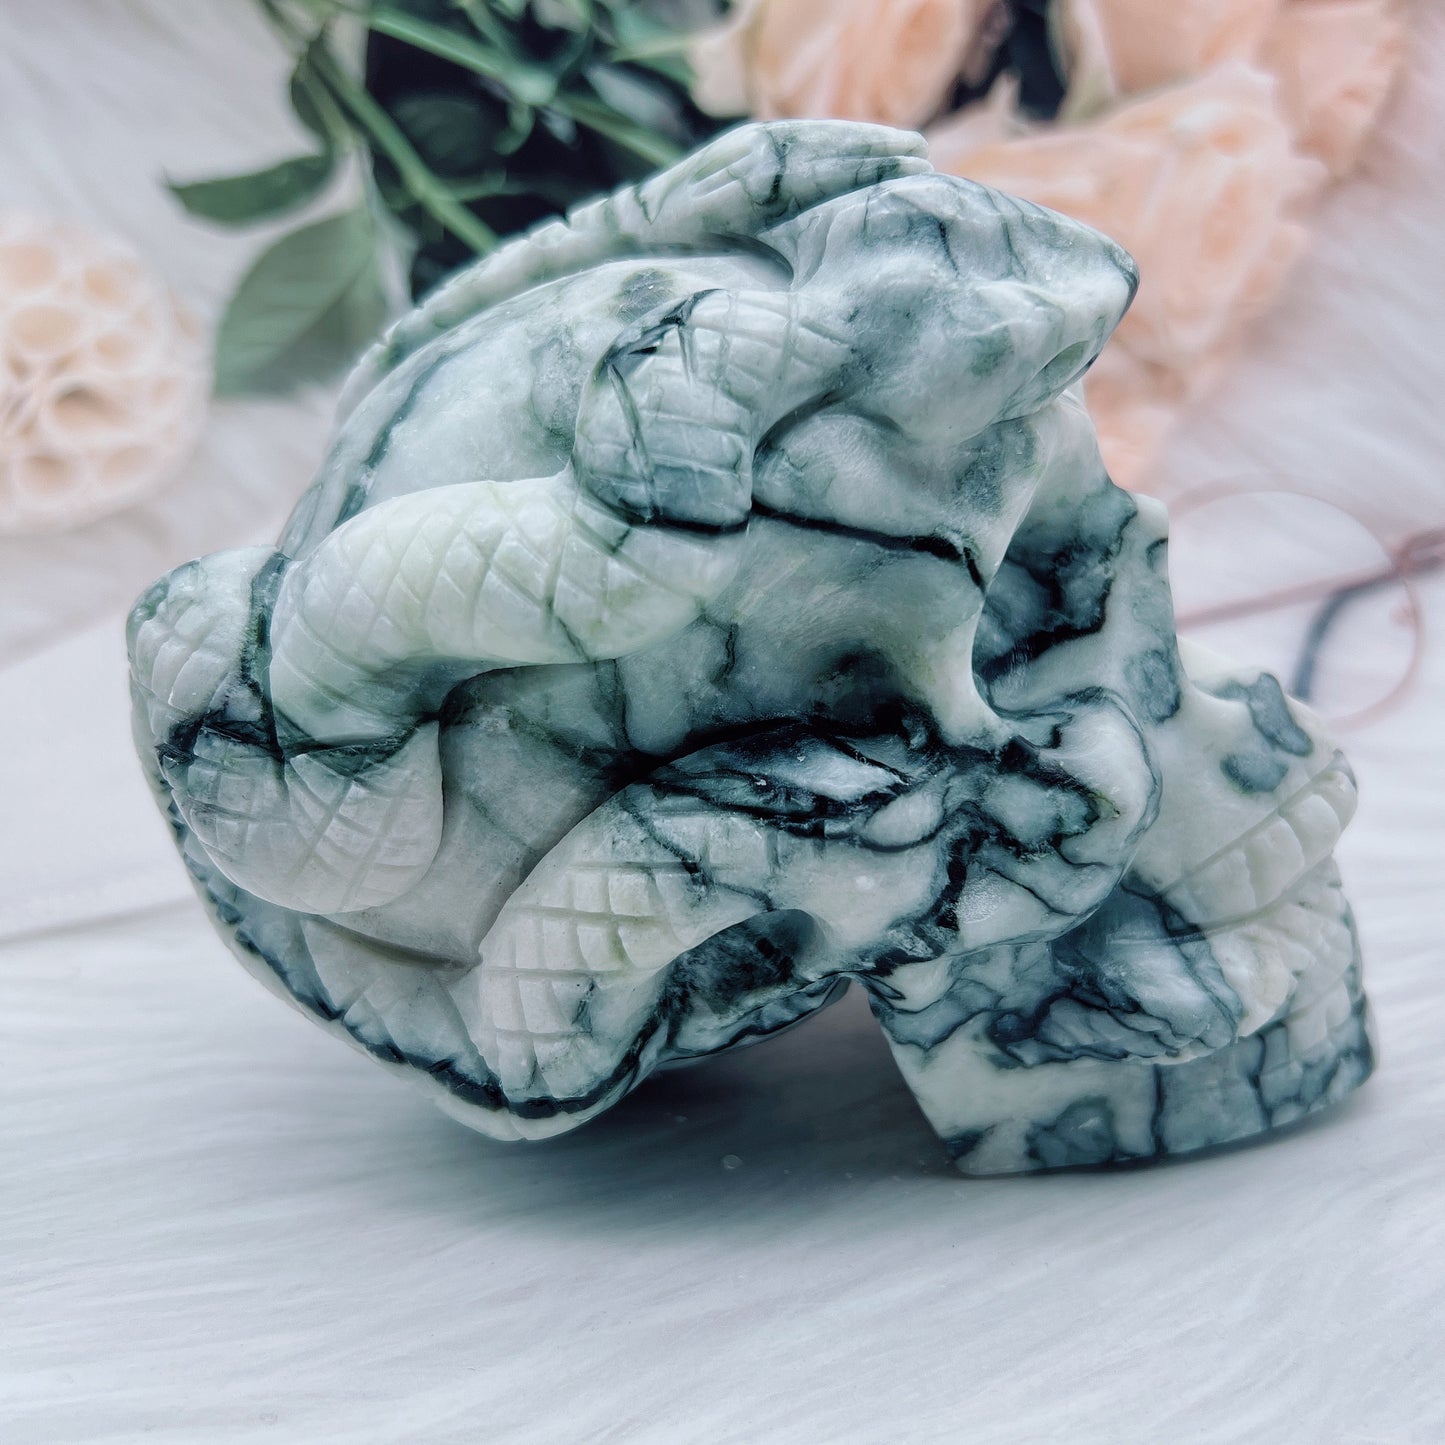 【defective items】Natural  black Lan Tian jade stone skull carving snake with skull medusa skull carving Home Ornament